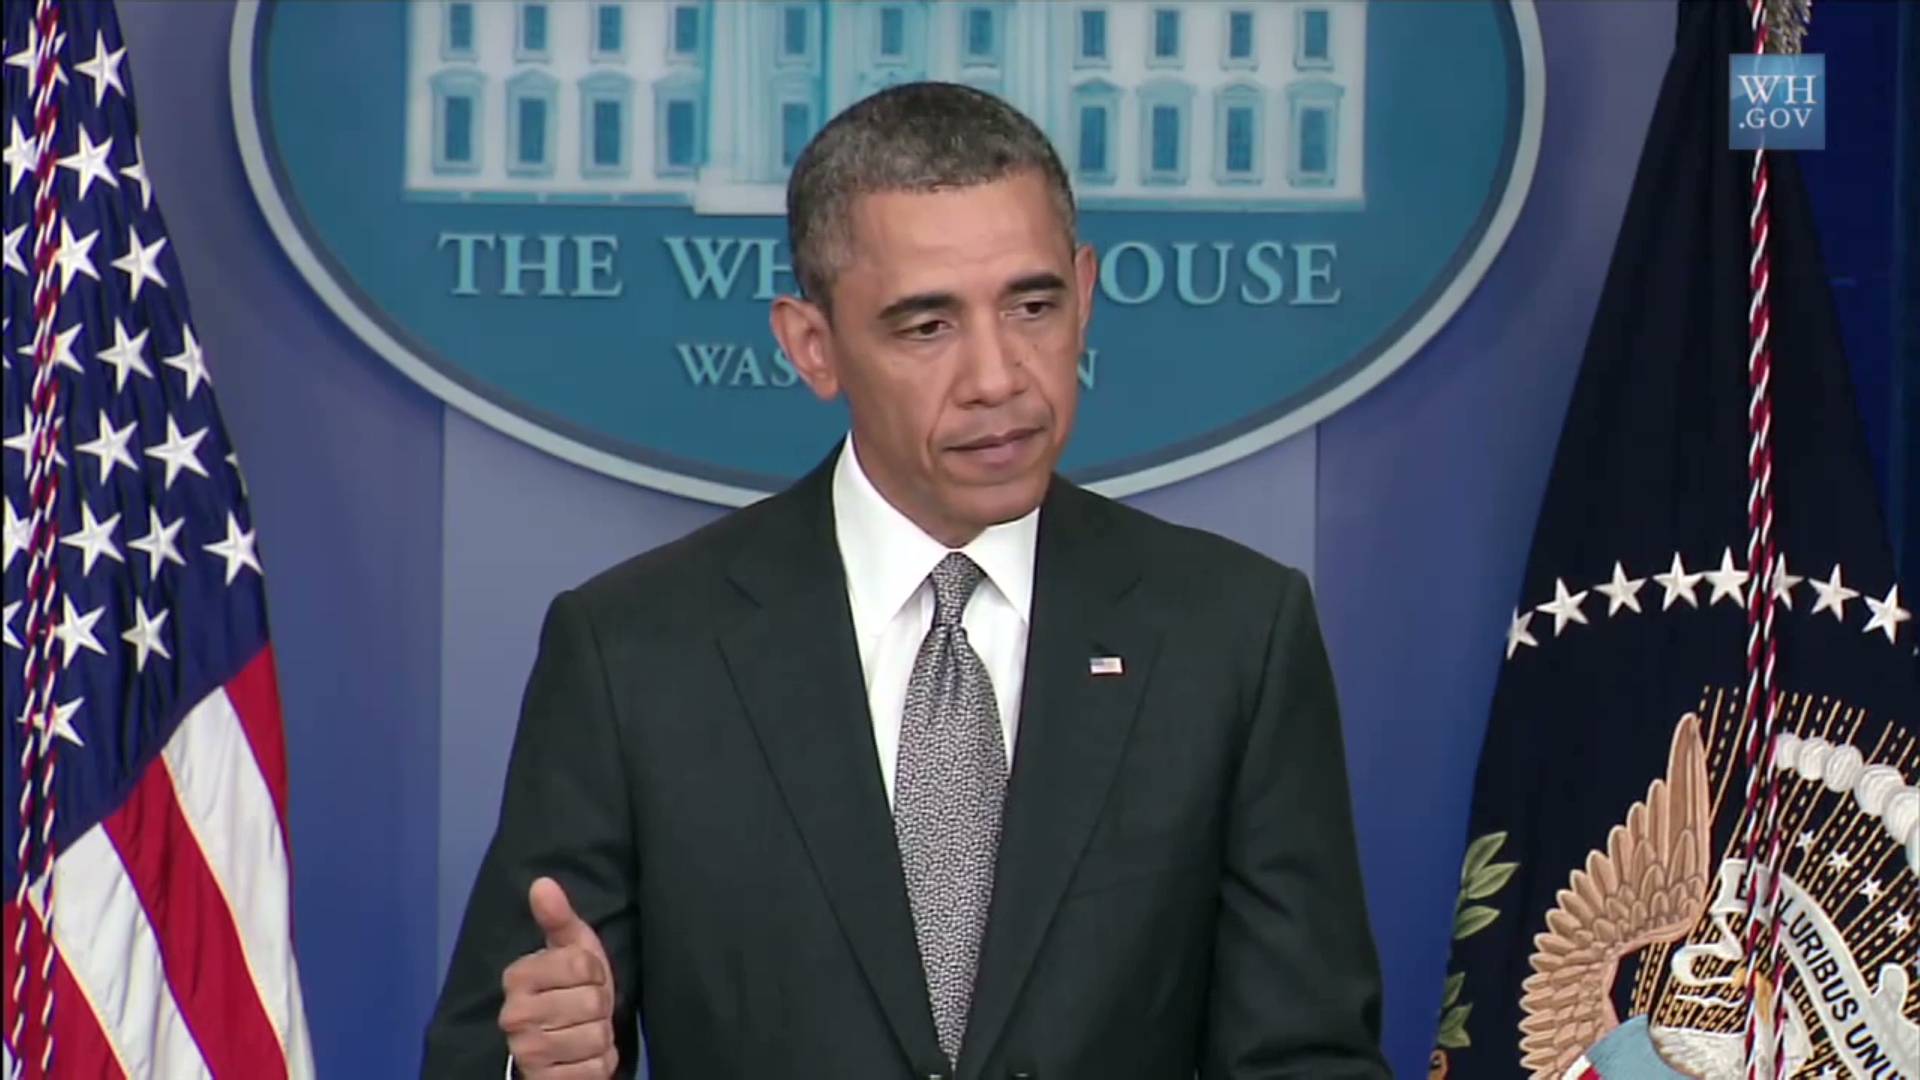 Obama Speaks on Boston Bombings